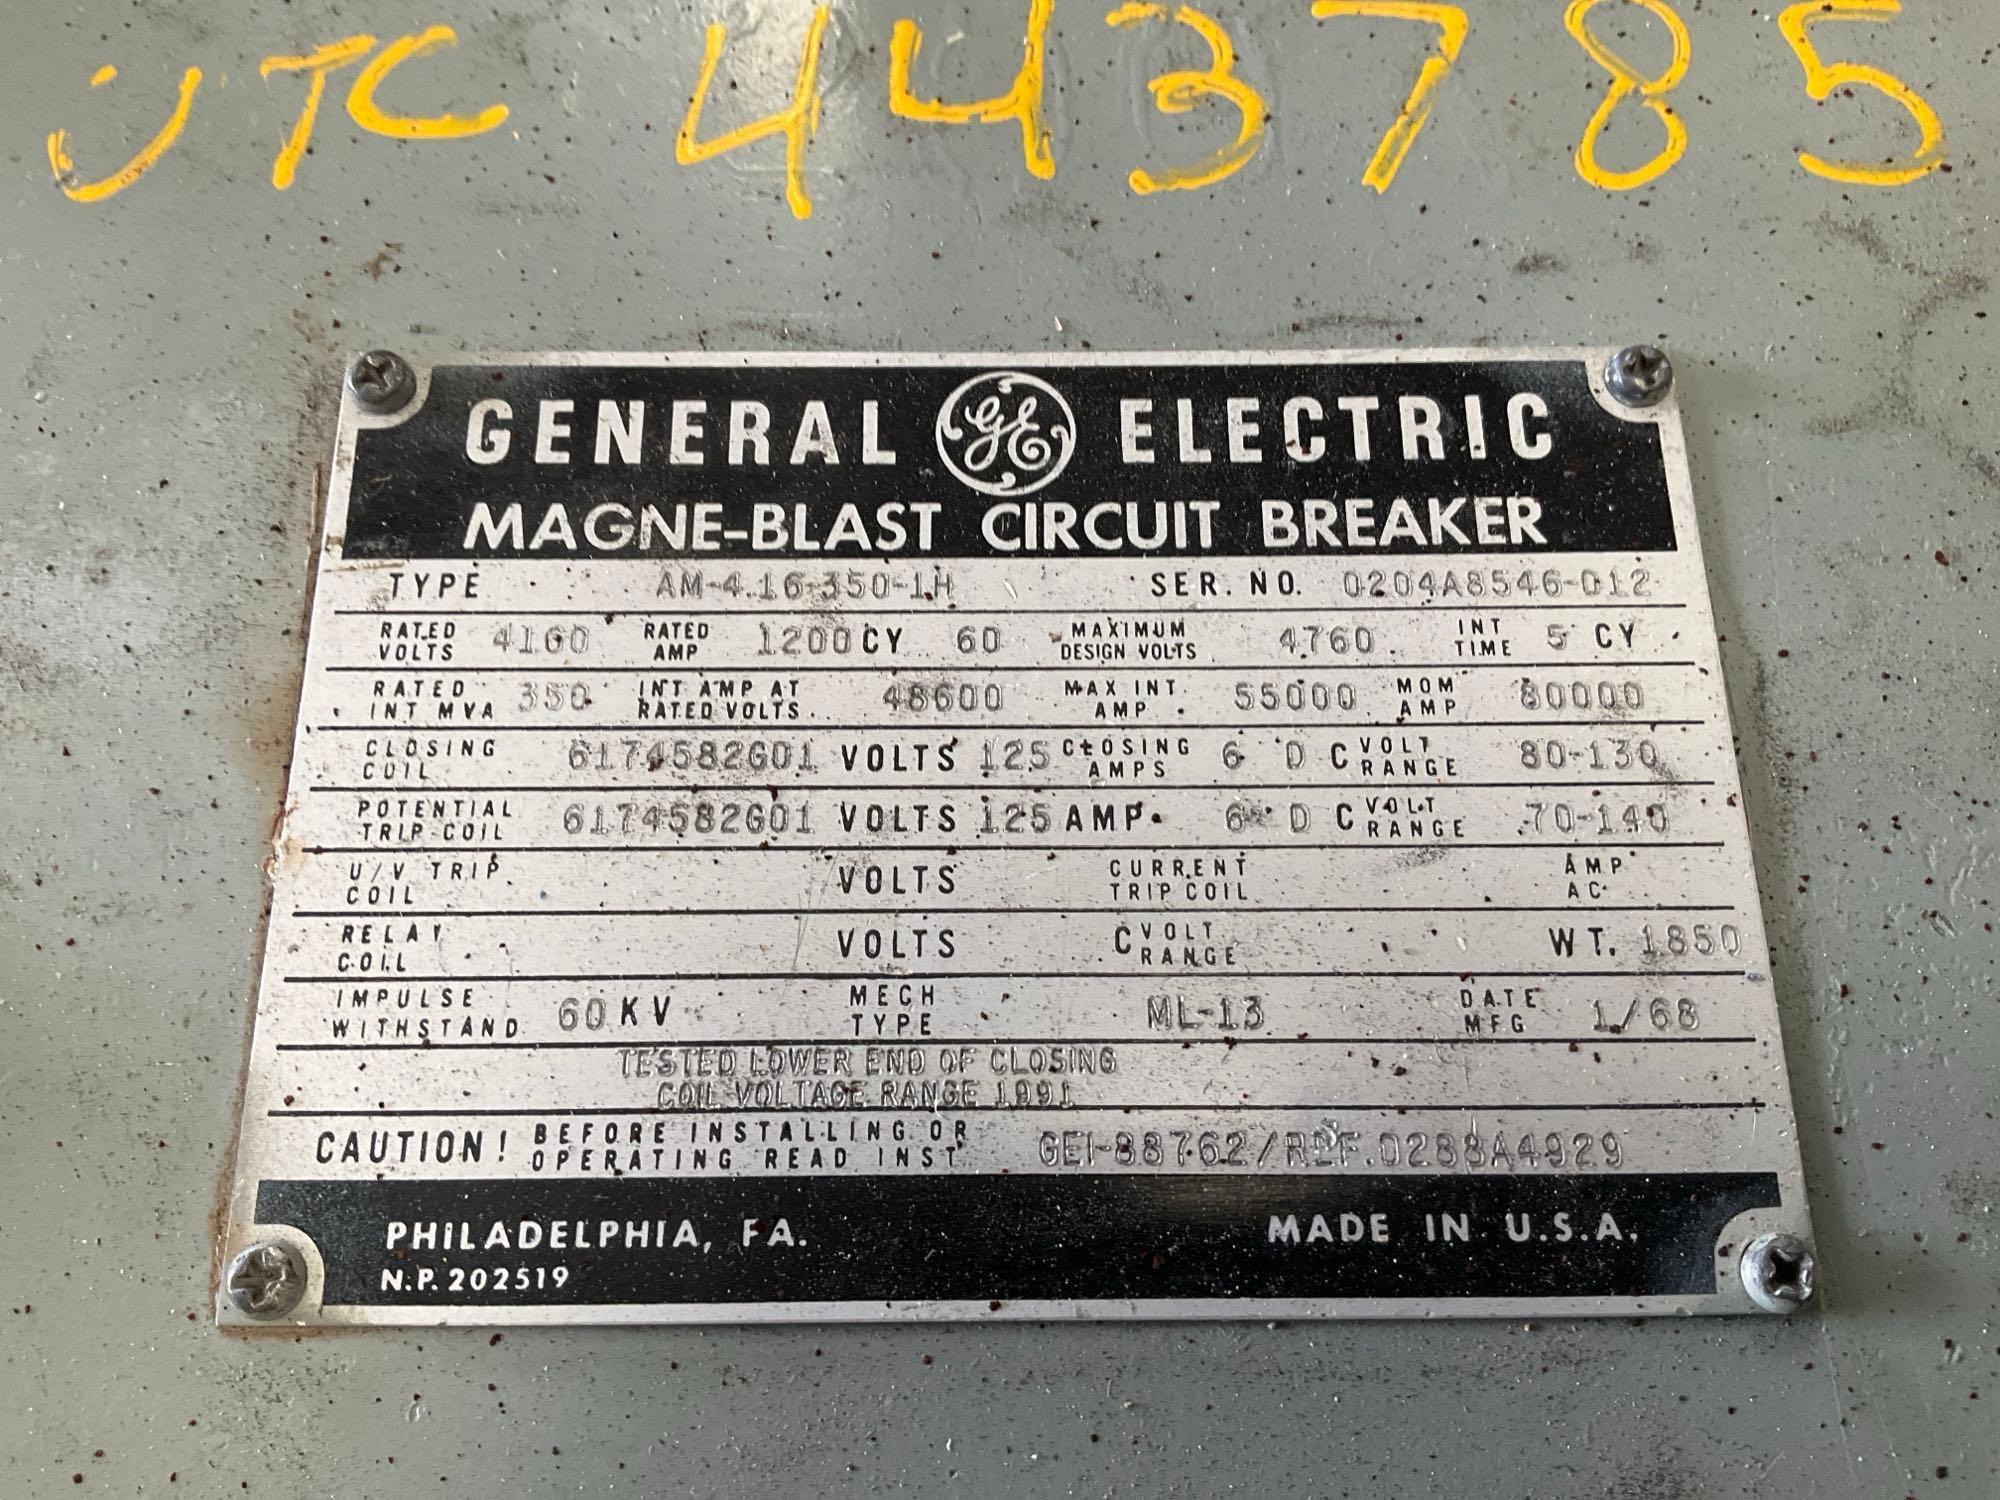 GE - GENERAL ELECTRIC MAGNE-BLAST CIRCUIT BREAKER, TYPE AM-4.16-350-2H, 60HZ, 1200 AMP